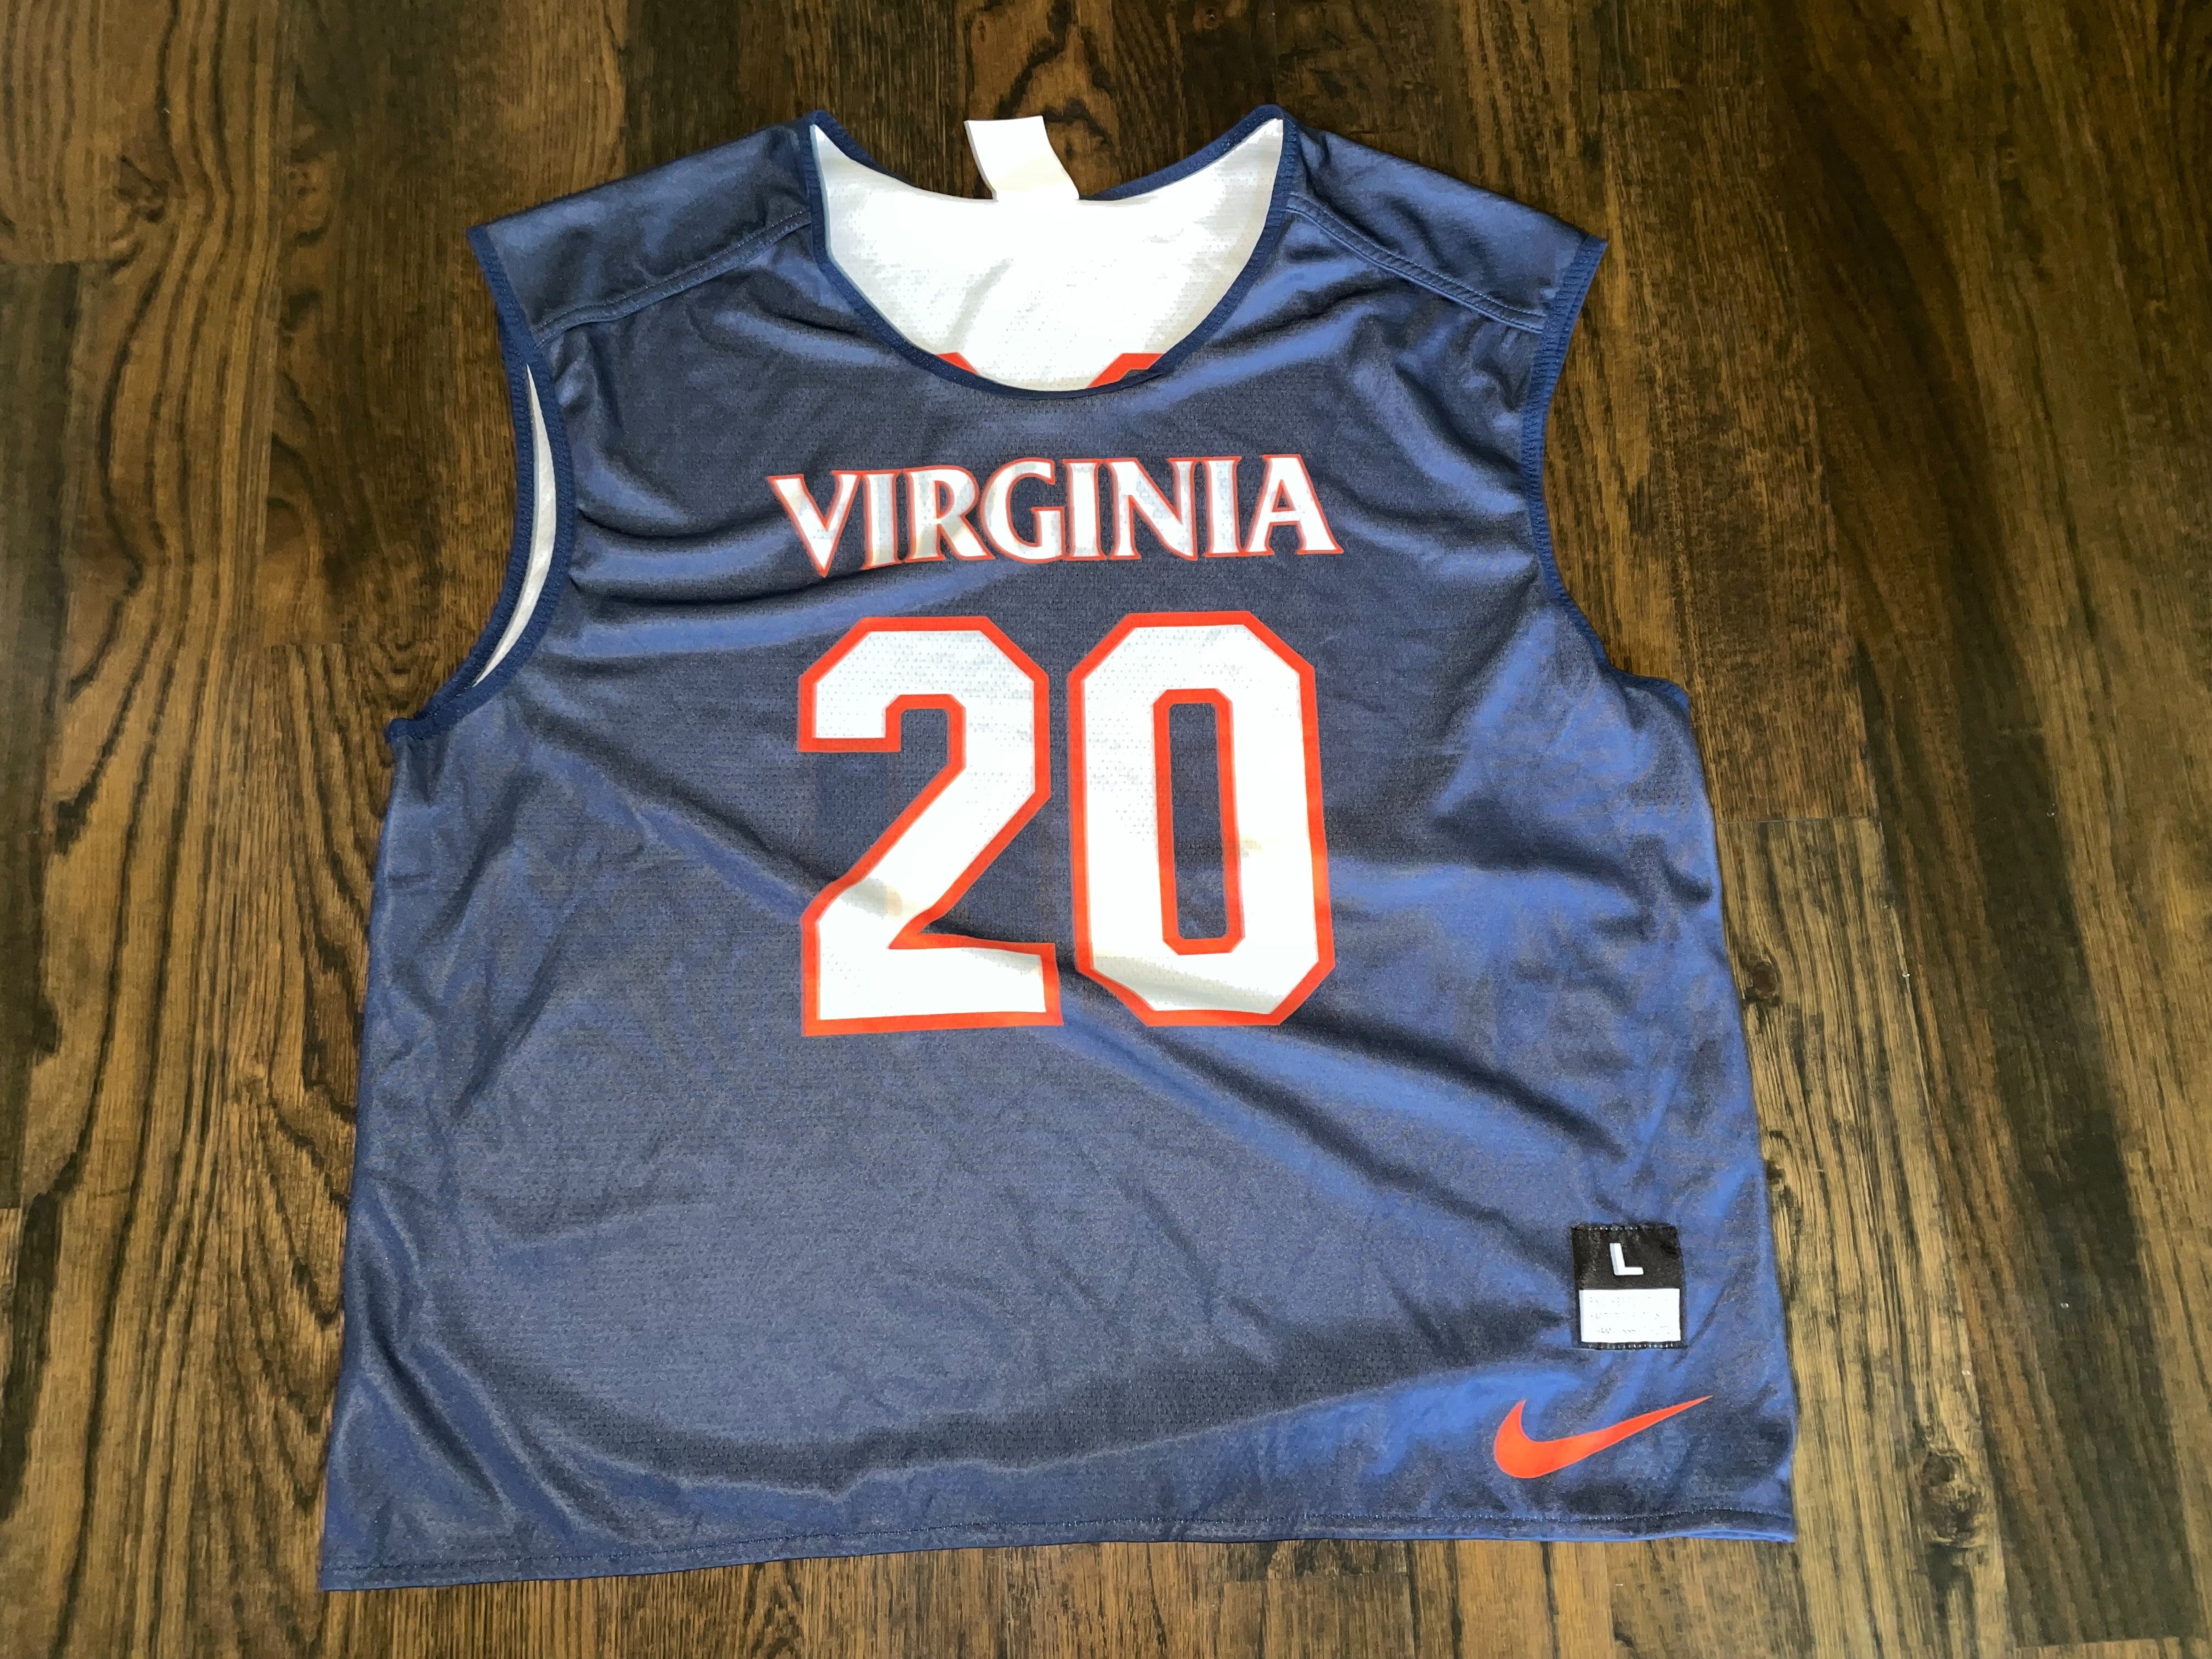 Nike Men's Virginia Tech Hokies #20 Maroon Replica Basketball